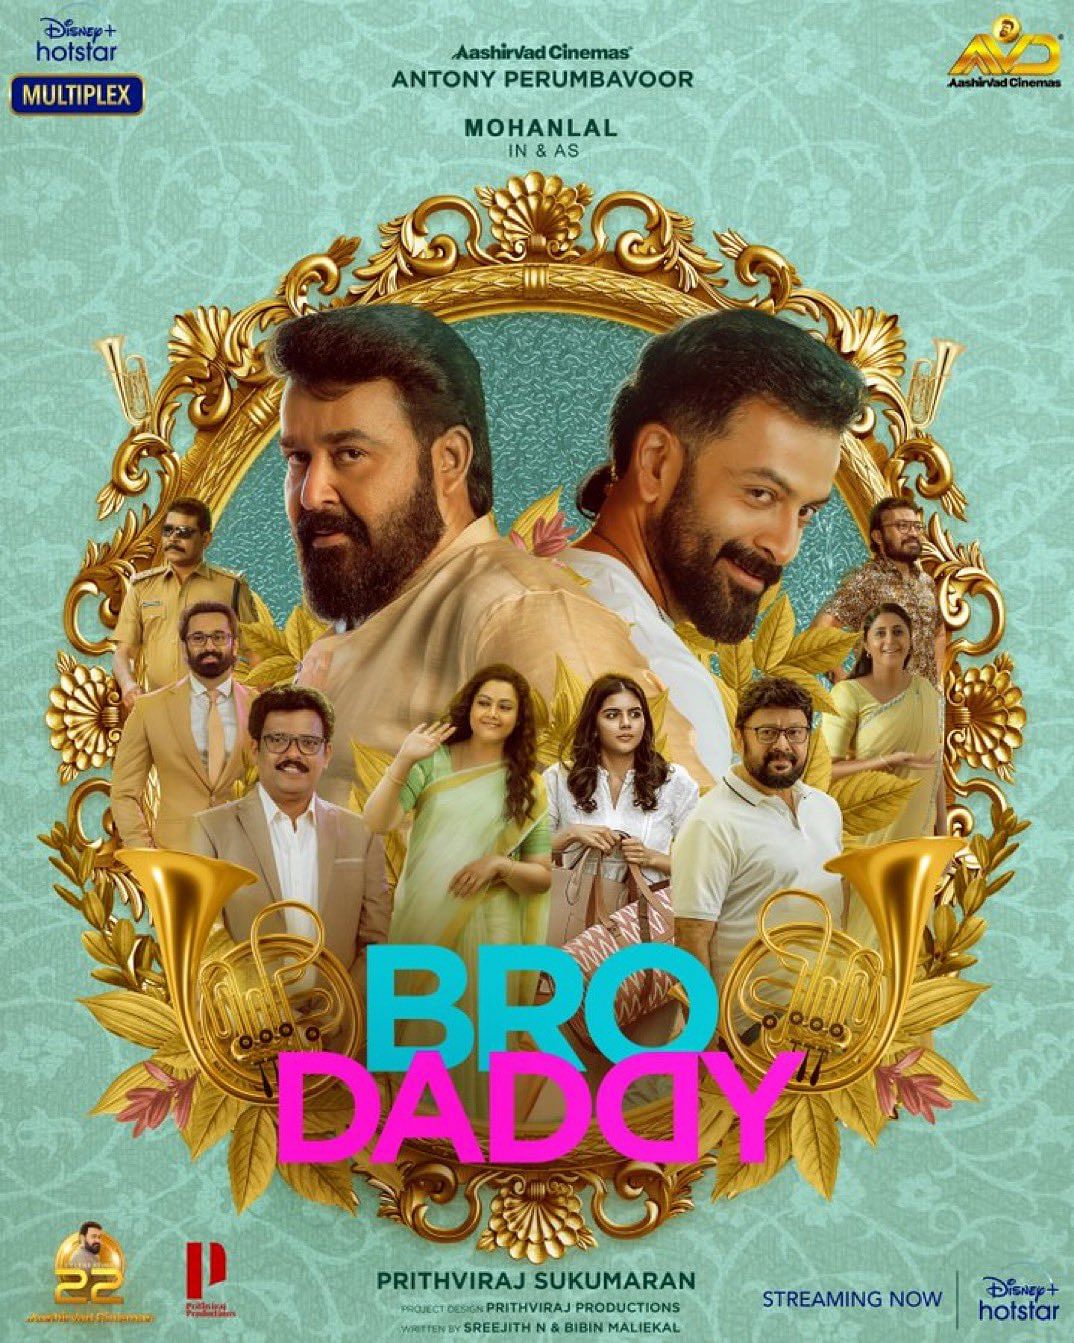 Prithviraj Sukumaran and Mohanlal lead the ensemble cast of 'Bro Daddy'.